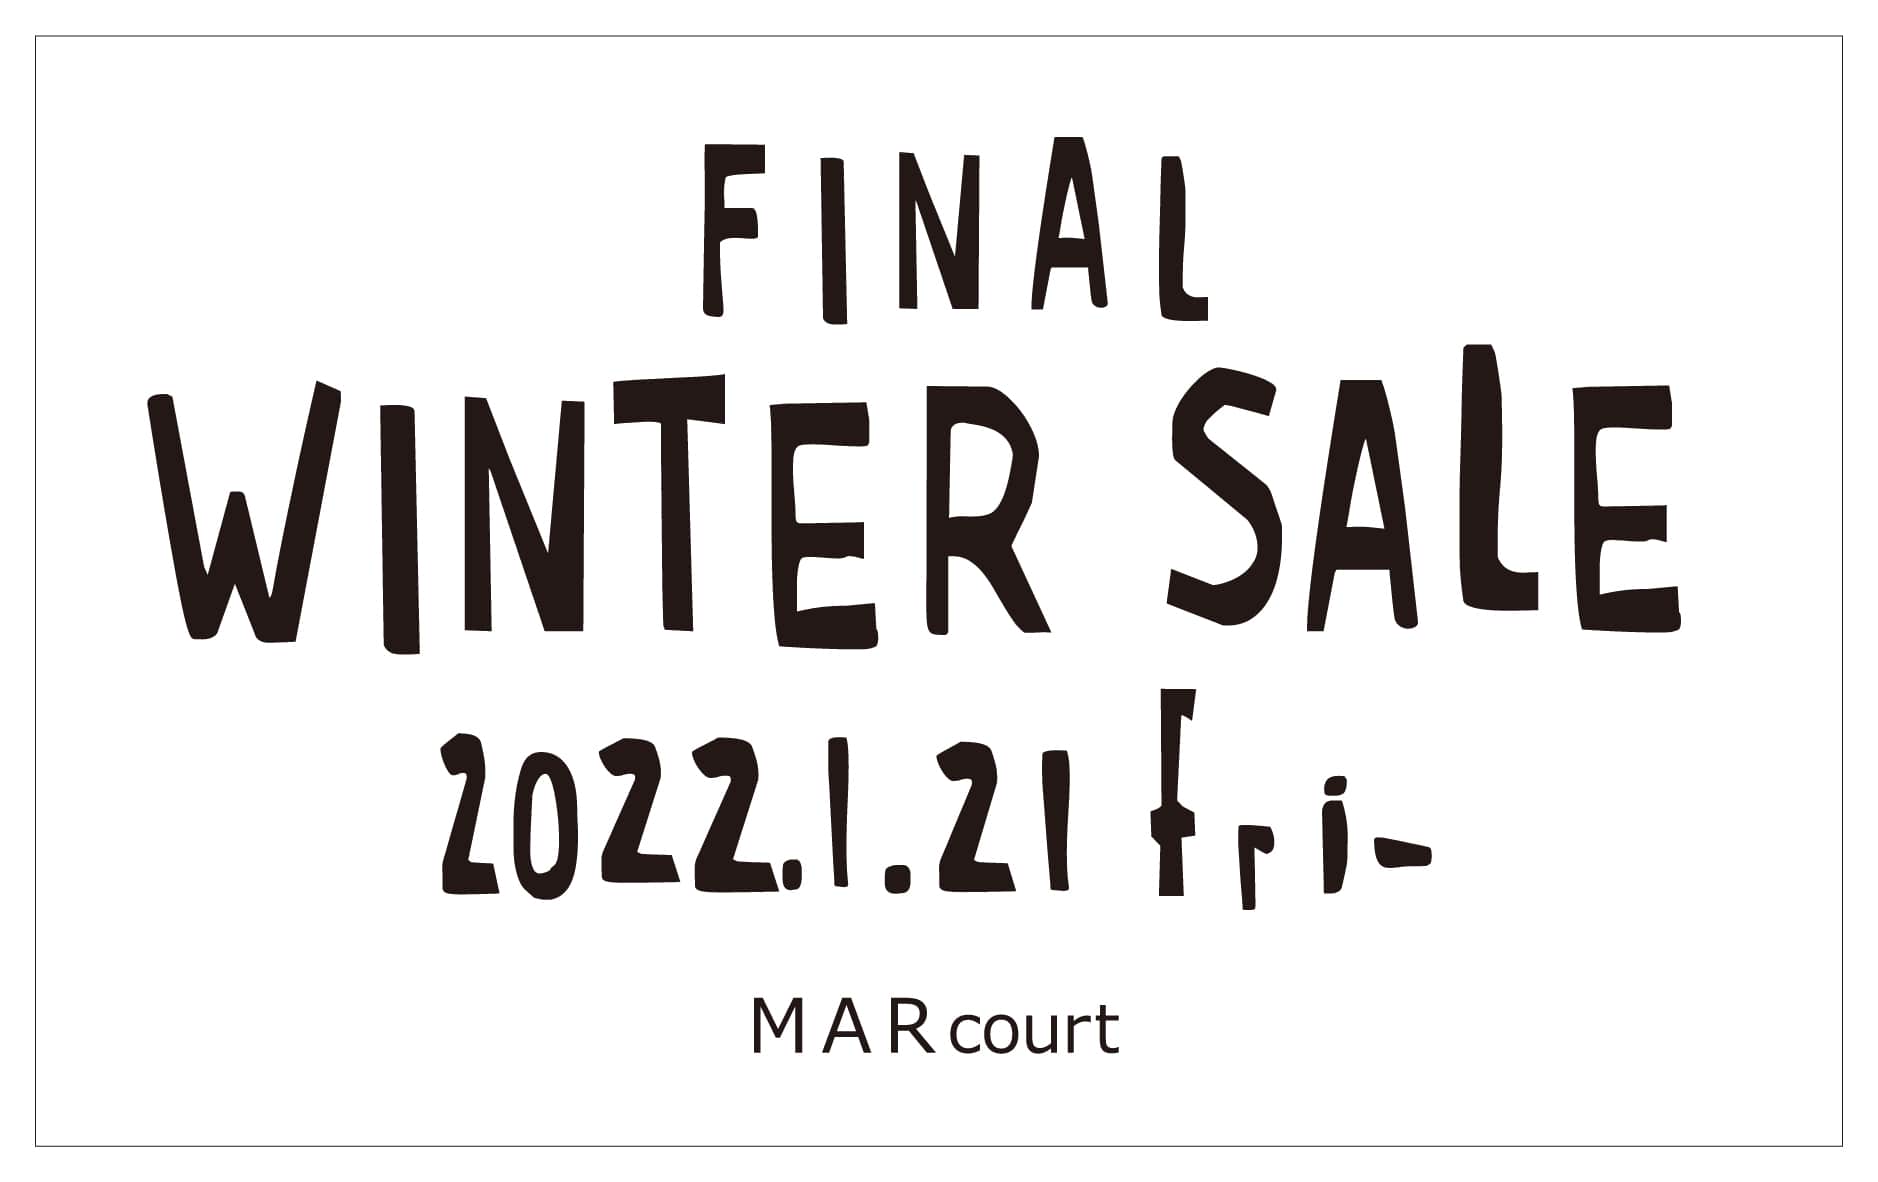 FINAL WINTER SALE 2022.1.21 FRI- MARcourt